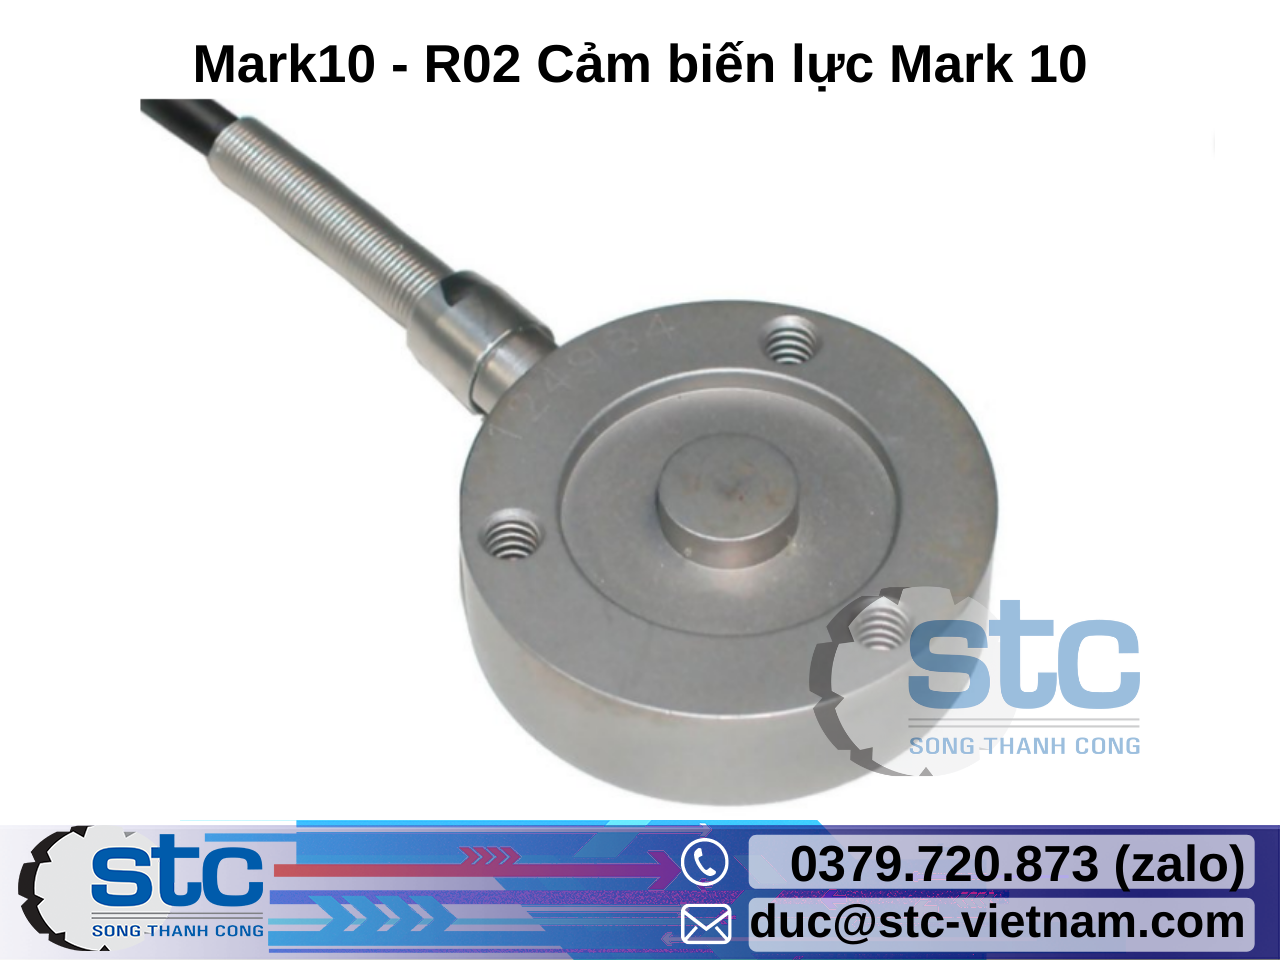 mark10-r02-cam-bien-luc-mark-10.png